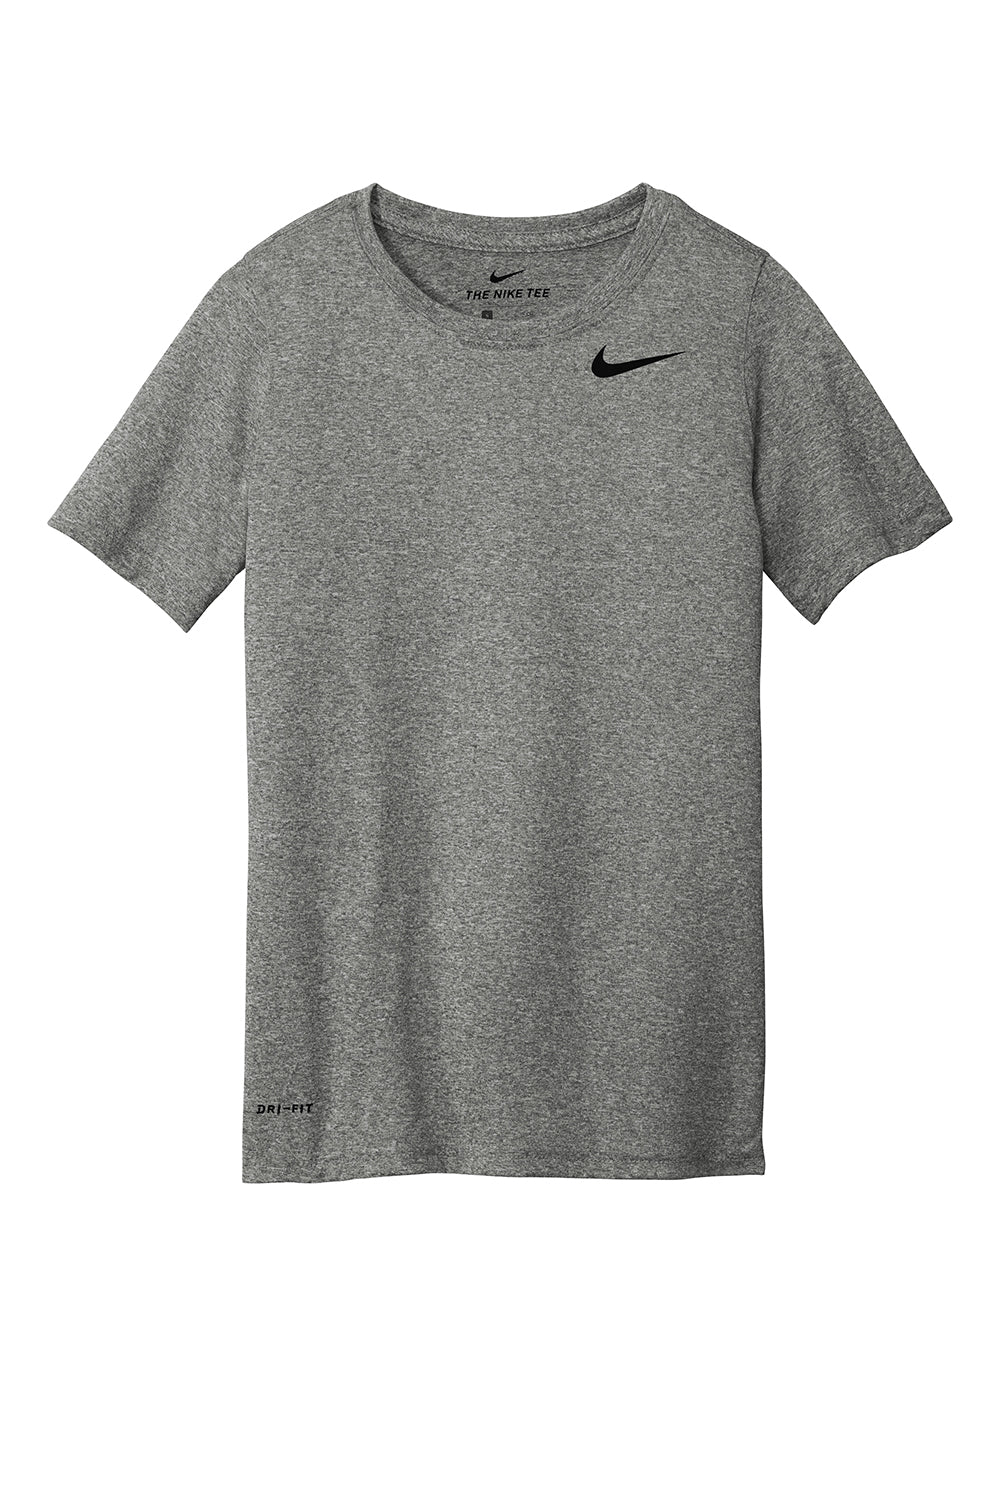 Nike DV7317 Youth Team rLegend Dri-Fit Moisure Wicking Short Sleeve Crewneck T-Shirt Heather Carbon Grey Flat Front